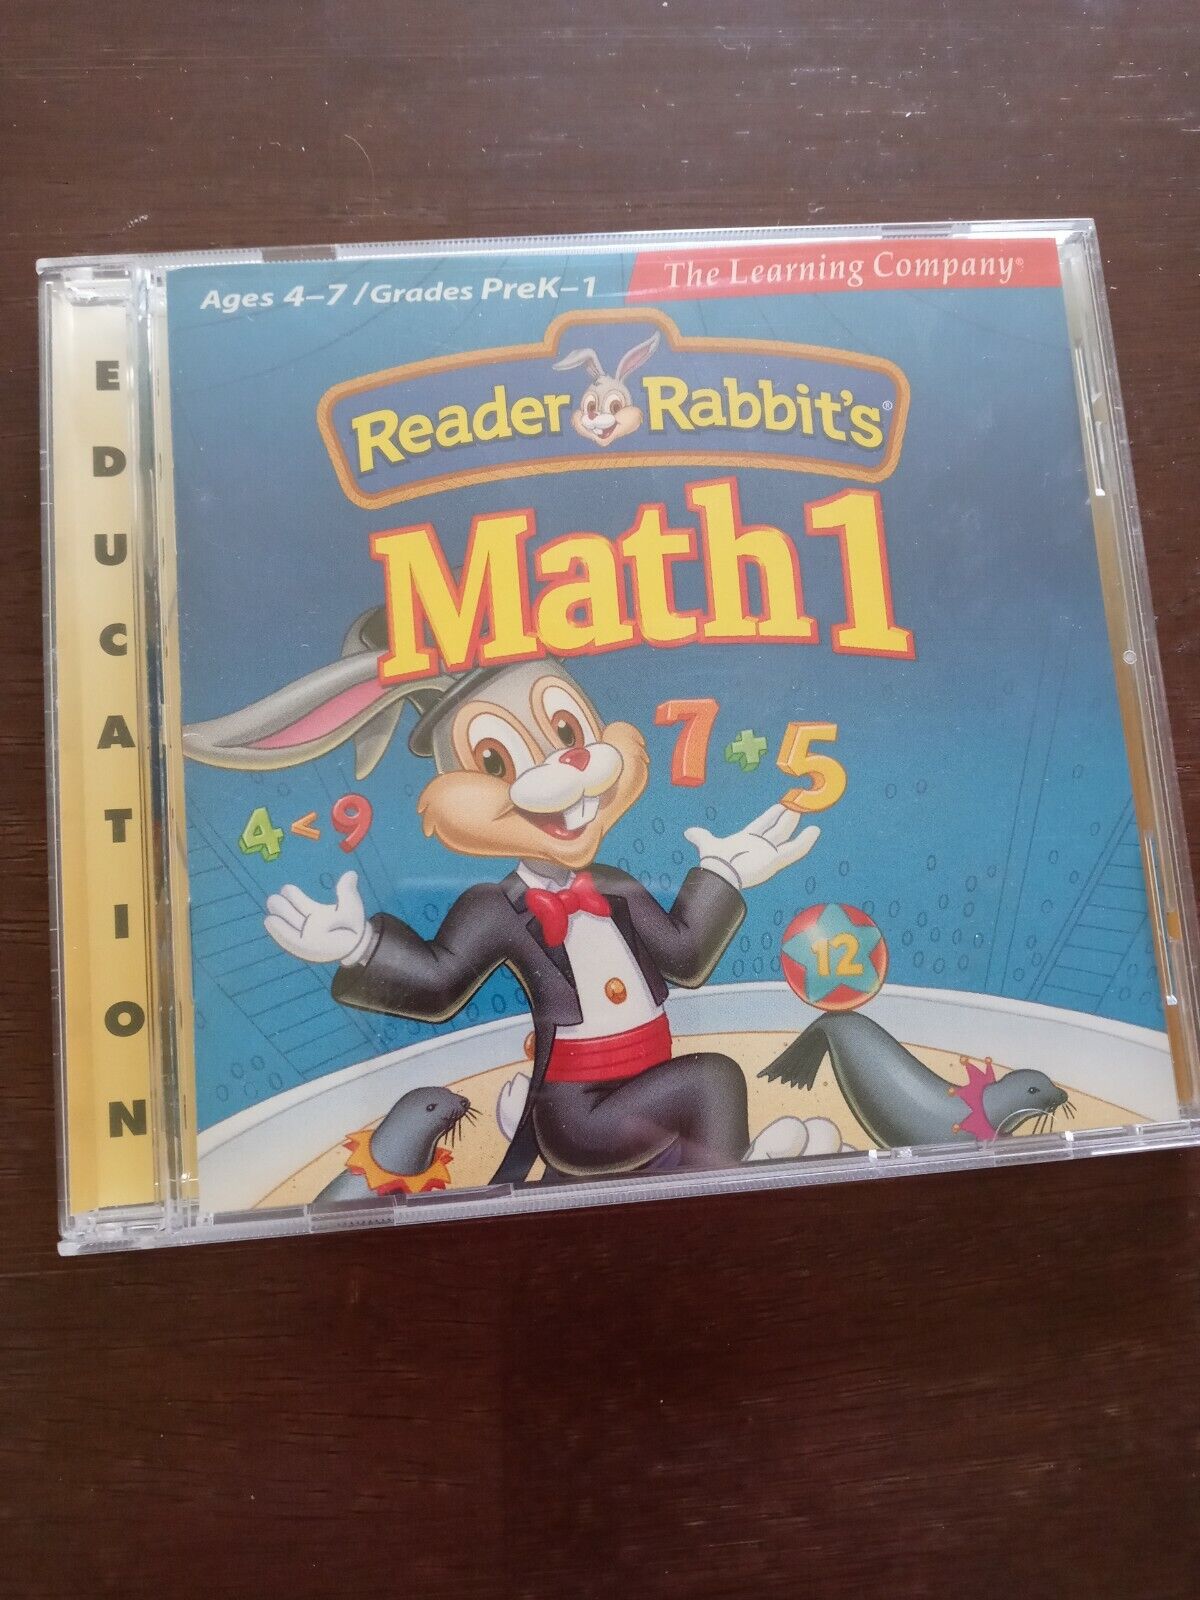 Reader Rabbit’s Math 1 CD-ROM (Ages 4-7) Win/Mac